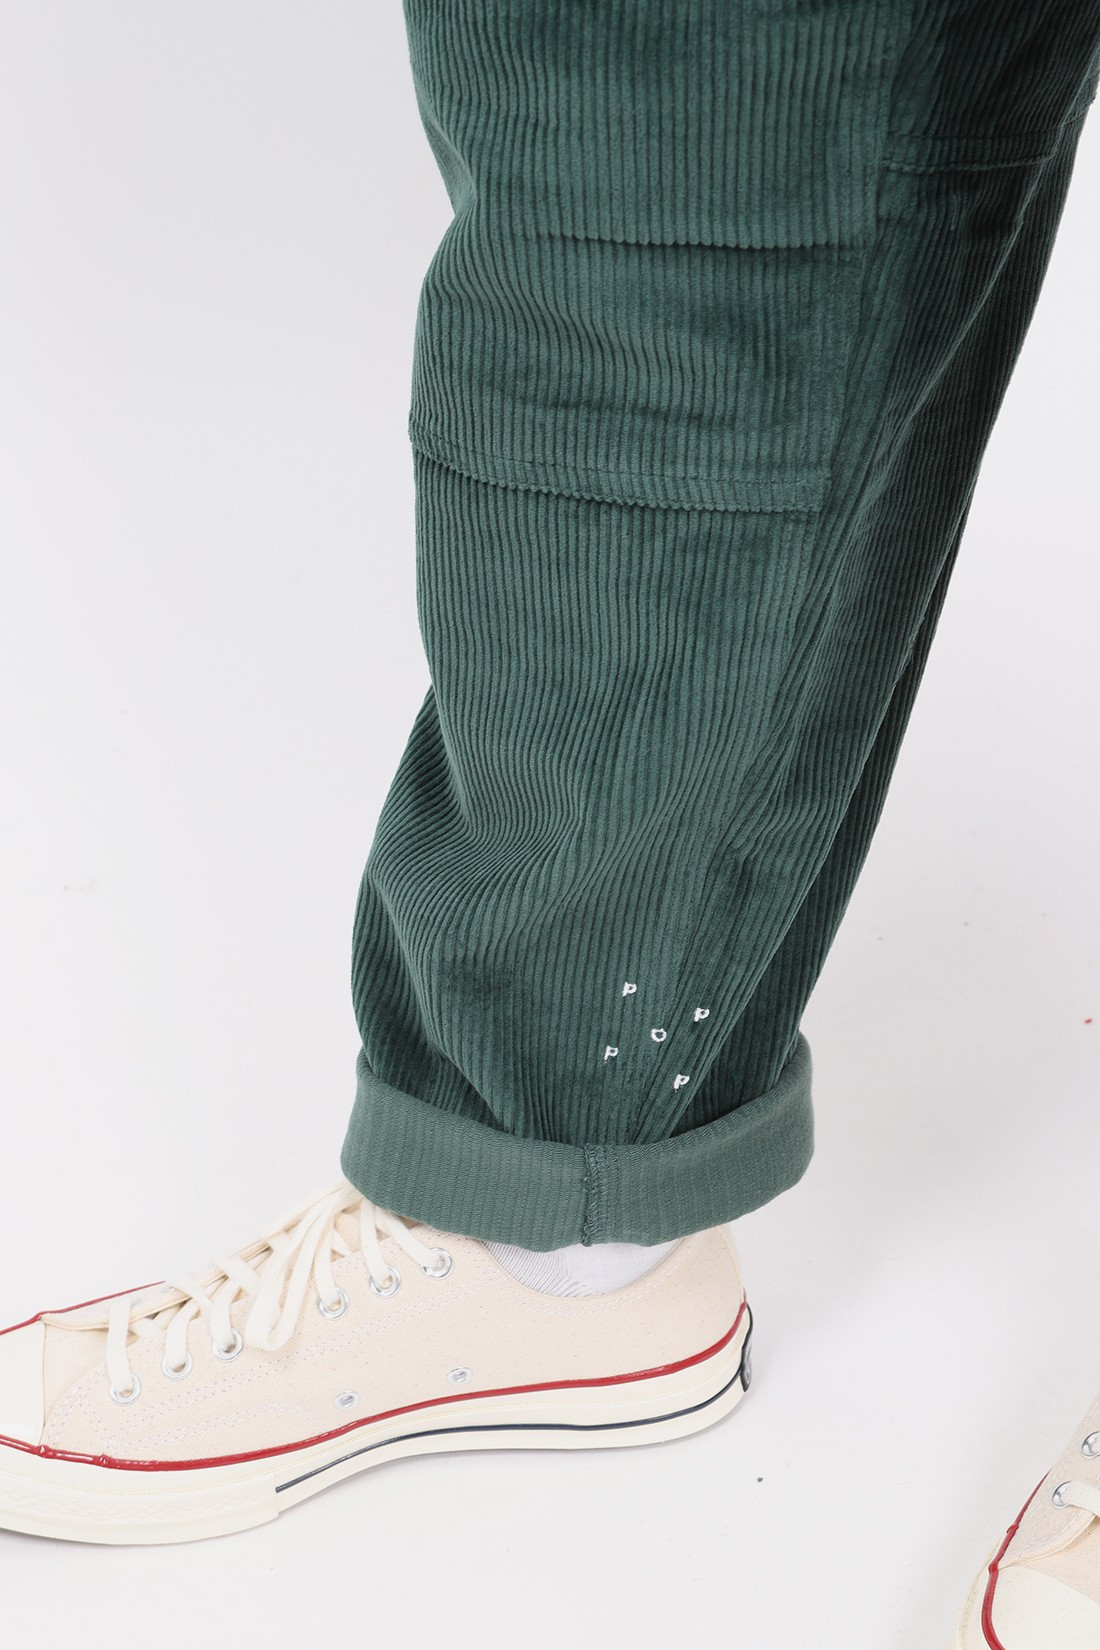 POP TRADING COMPANY / Phatigue farm pants Bistro green